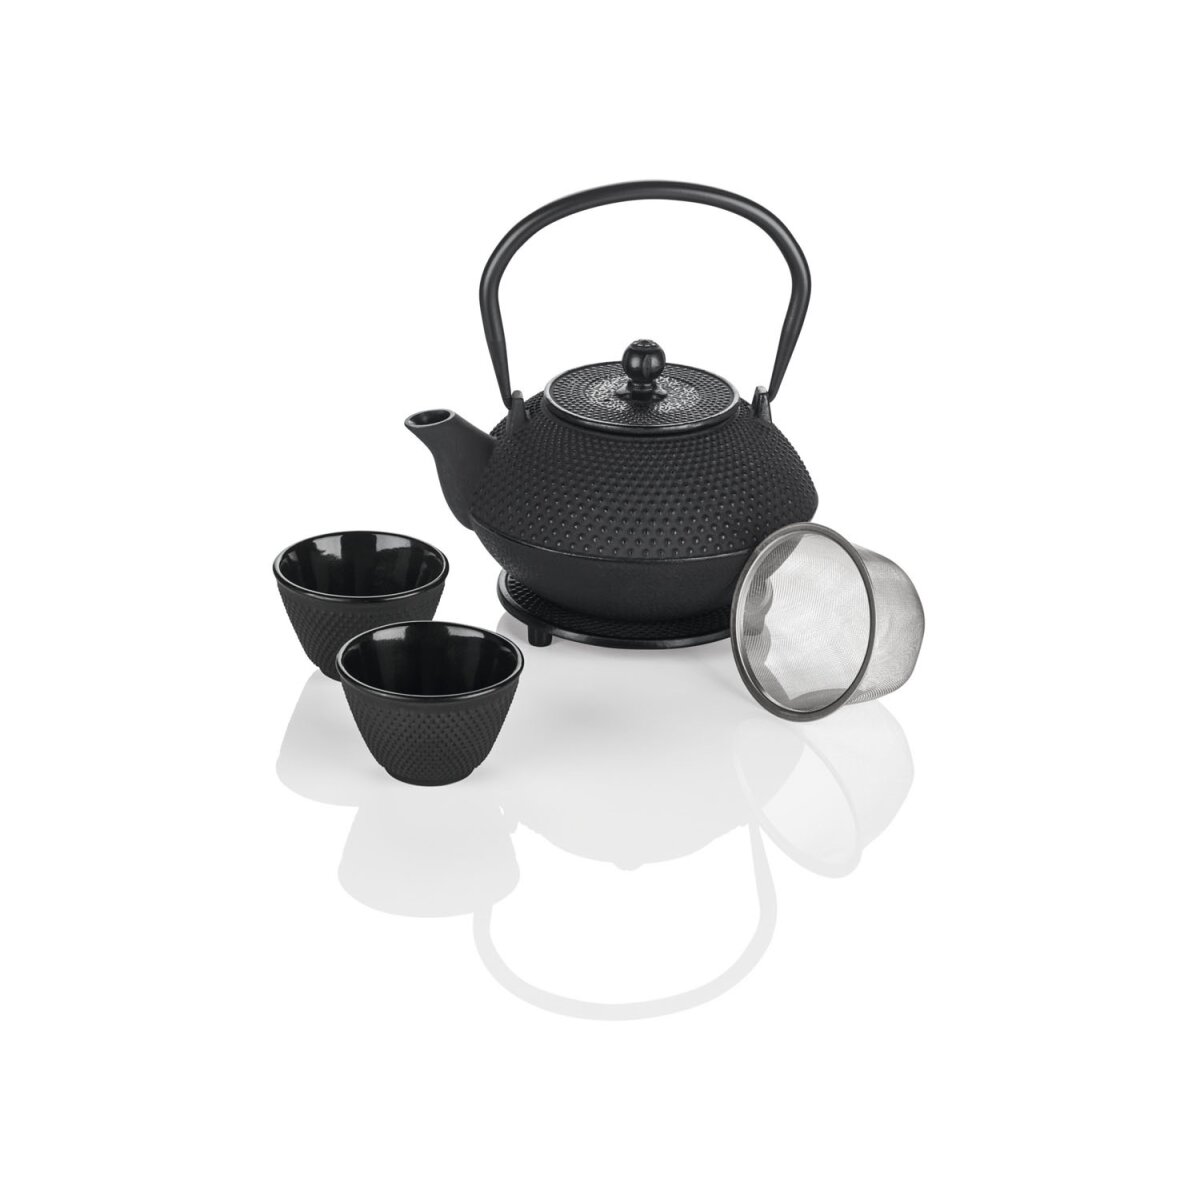 gut, sehr mit 4-teilig, Gusseisen-Tee-Set, herausnehmbarem B-Ware ERNESTO® € - Teefilter 20,99